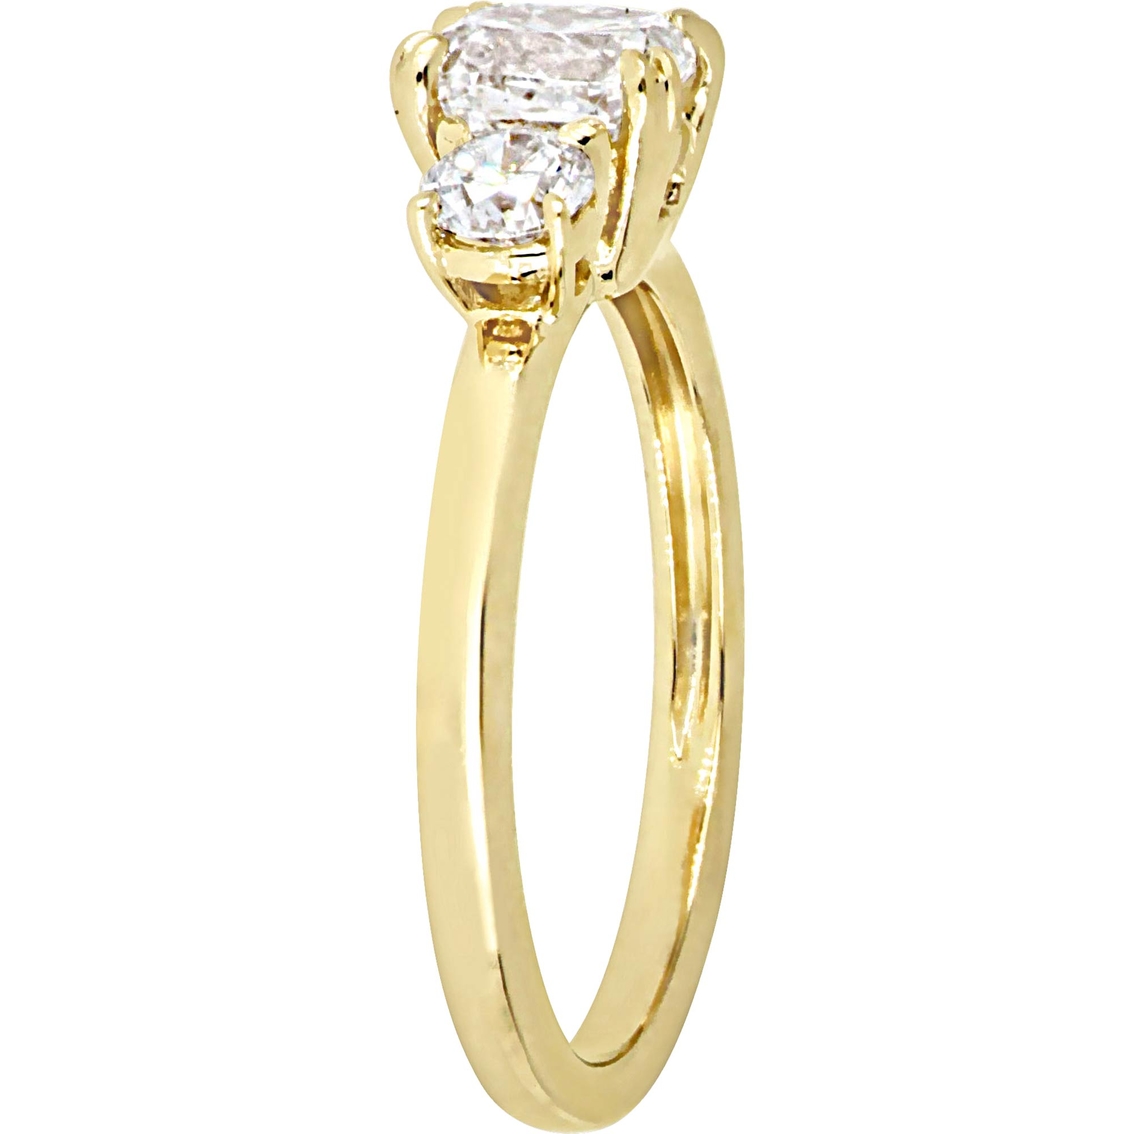 14K Yellow Gold 1 1/2 CTW Diamond Cushion Cut Engagement Ring - Image 2 of 4